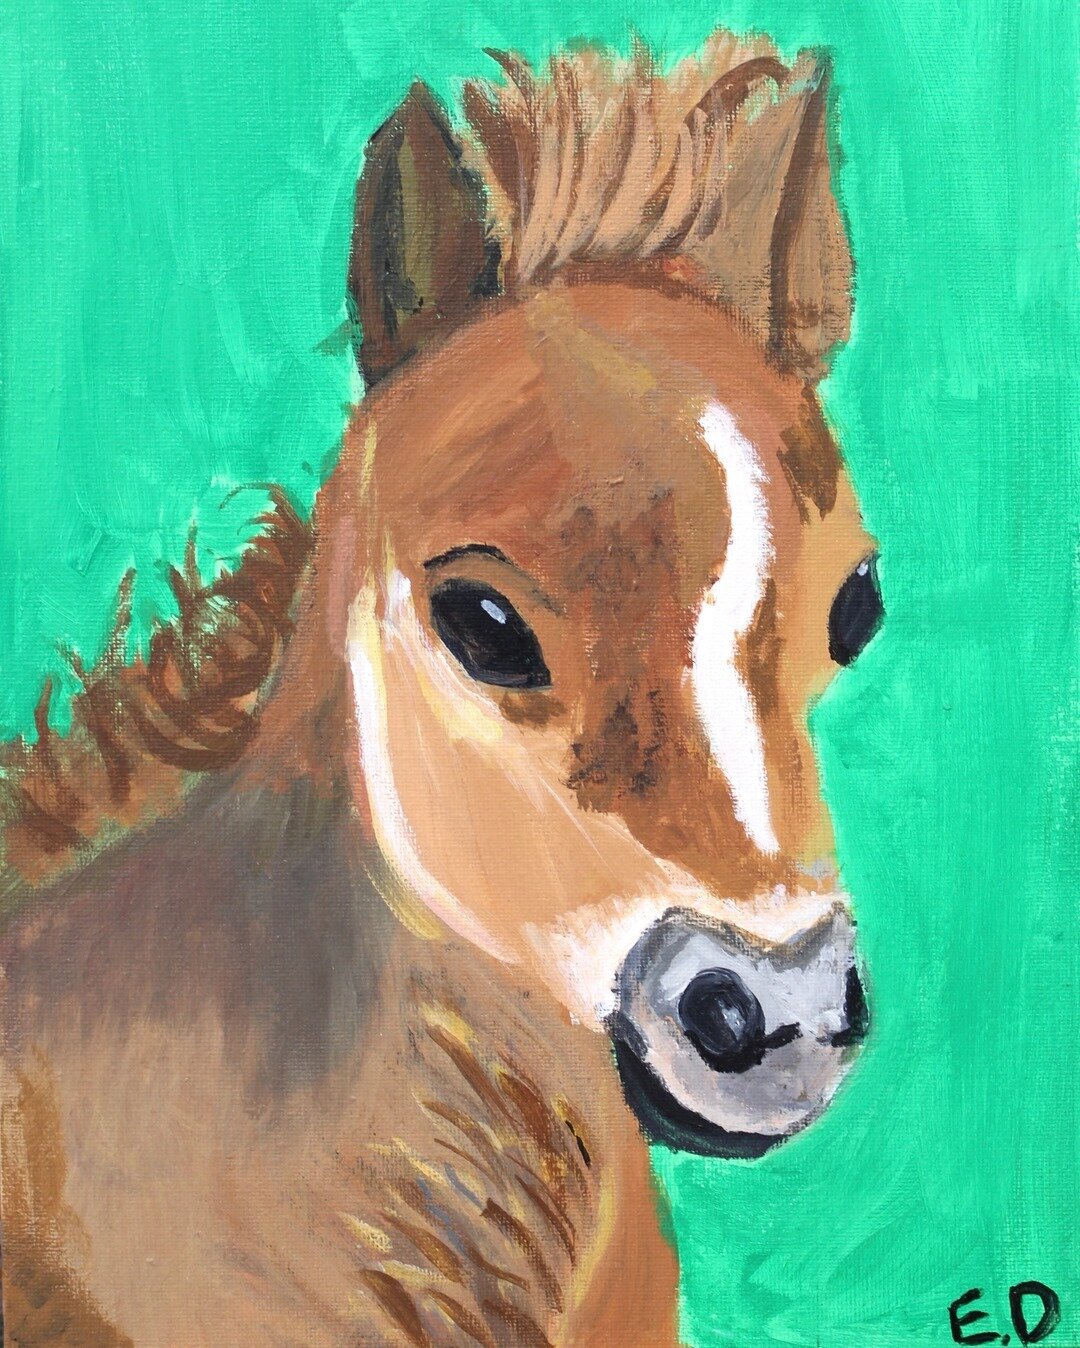 &quot;Baby Horse&quot; Acrylic Painting⠀⠀⠀⠀⠀⠀⠀⠀⠀
Artist: Elsie Drysdale, age 10⠀⠀⠀⠀⠀⠀⠀⠀⠀
#horsepainting #horseacrylic #babyhorse #acrylic #painting #acrylicpainting #instaart #art #artclass #artstudent #utahart #utahartist #sydneybowmanartclass